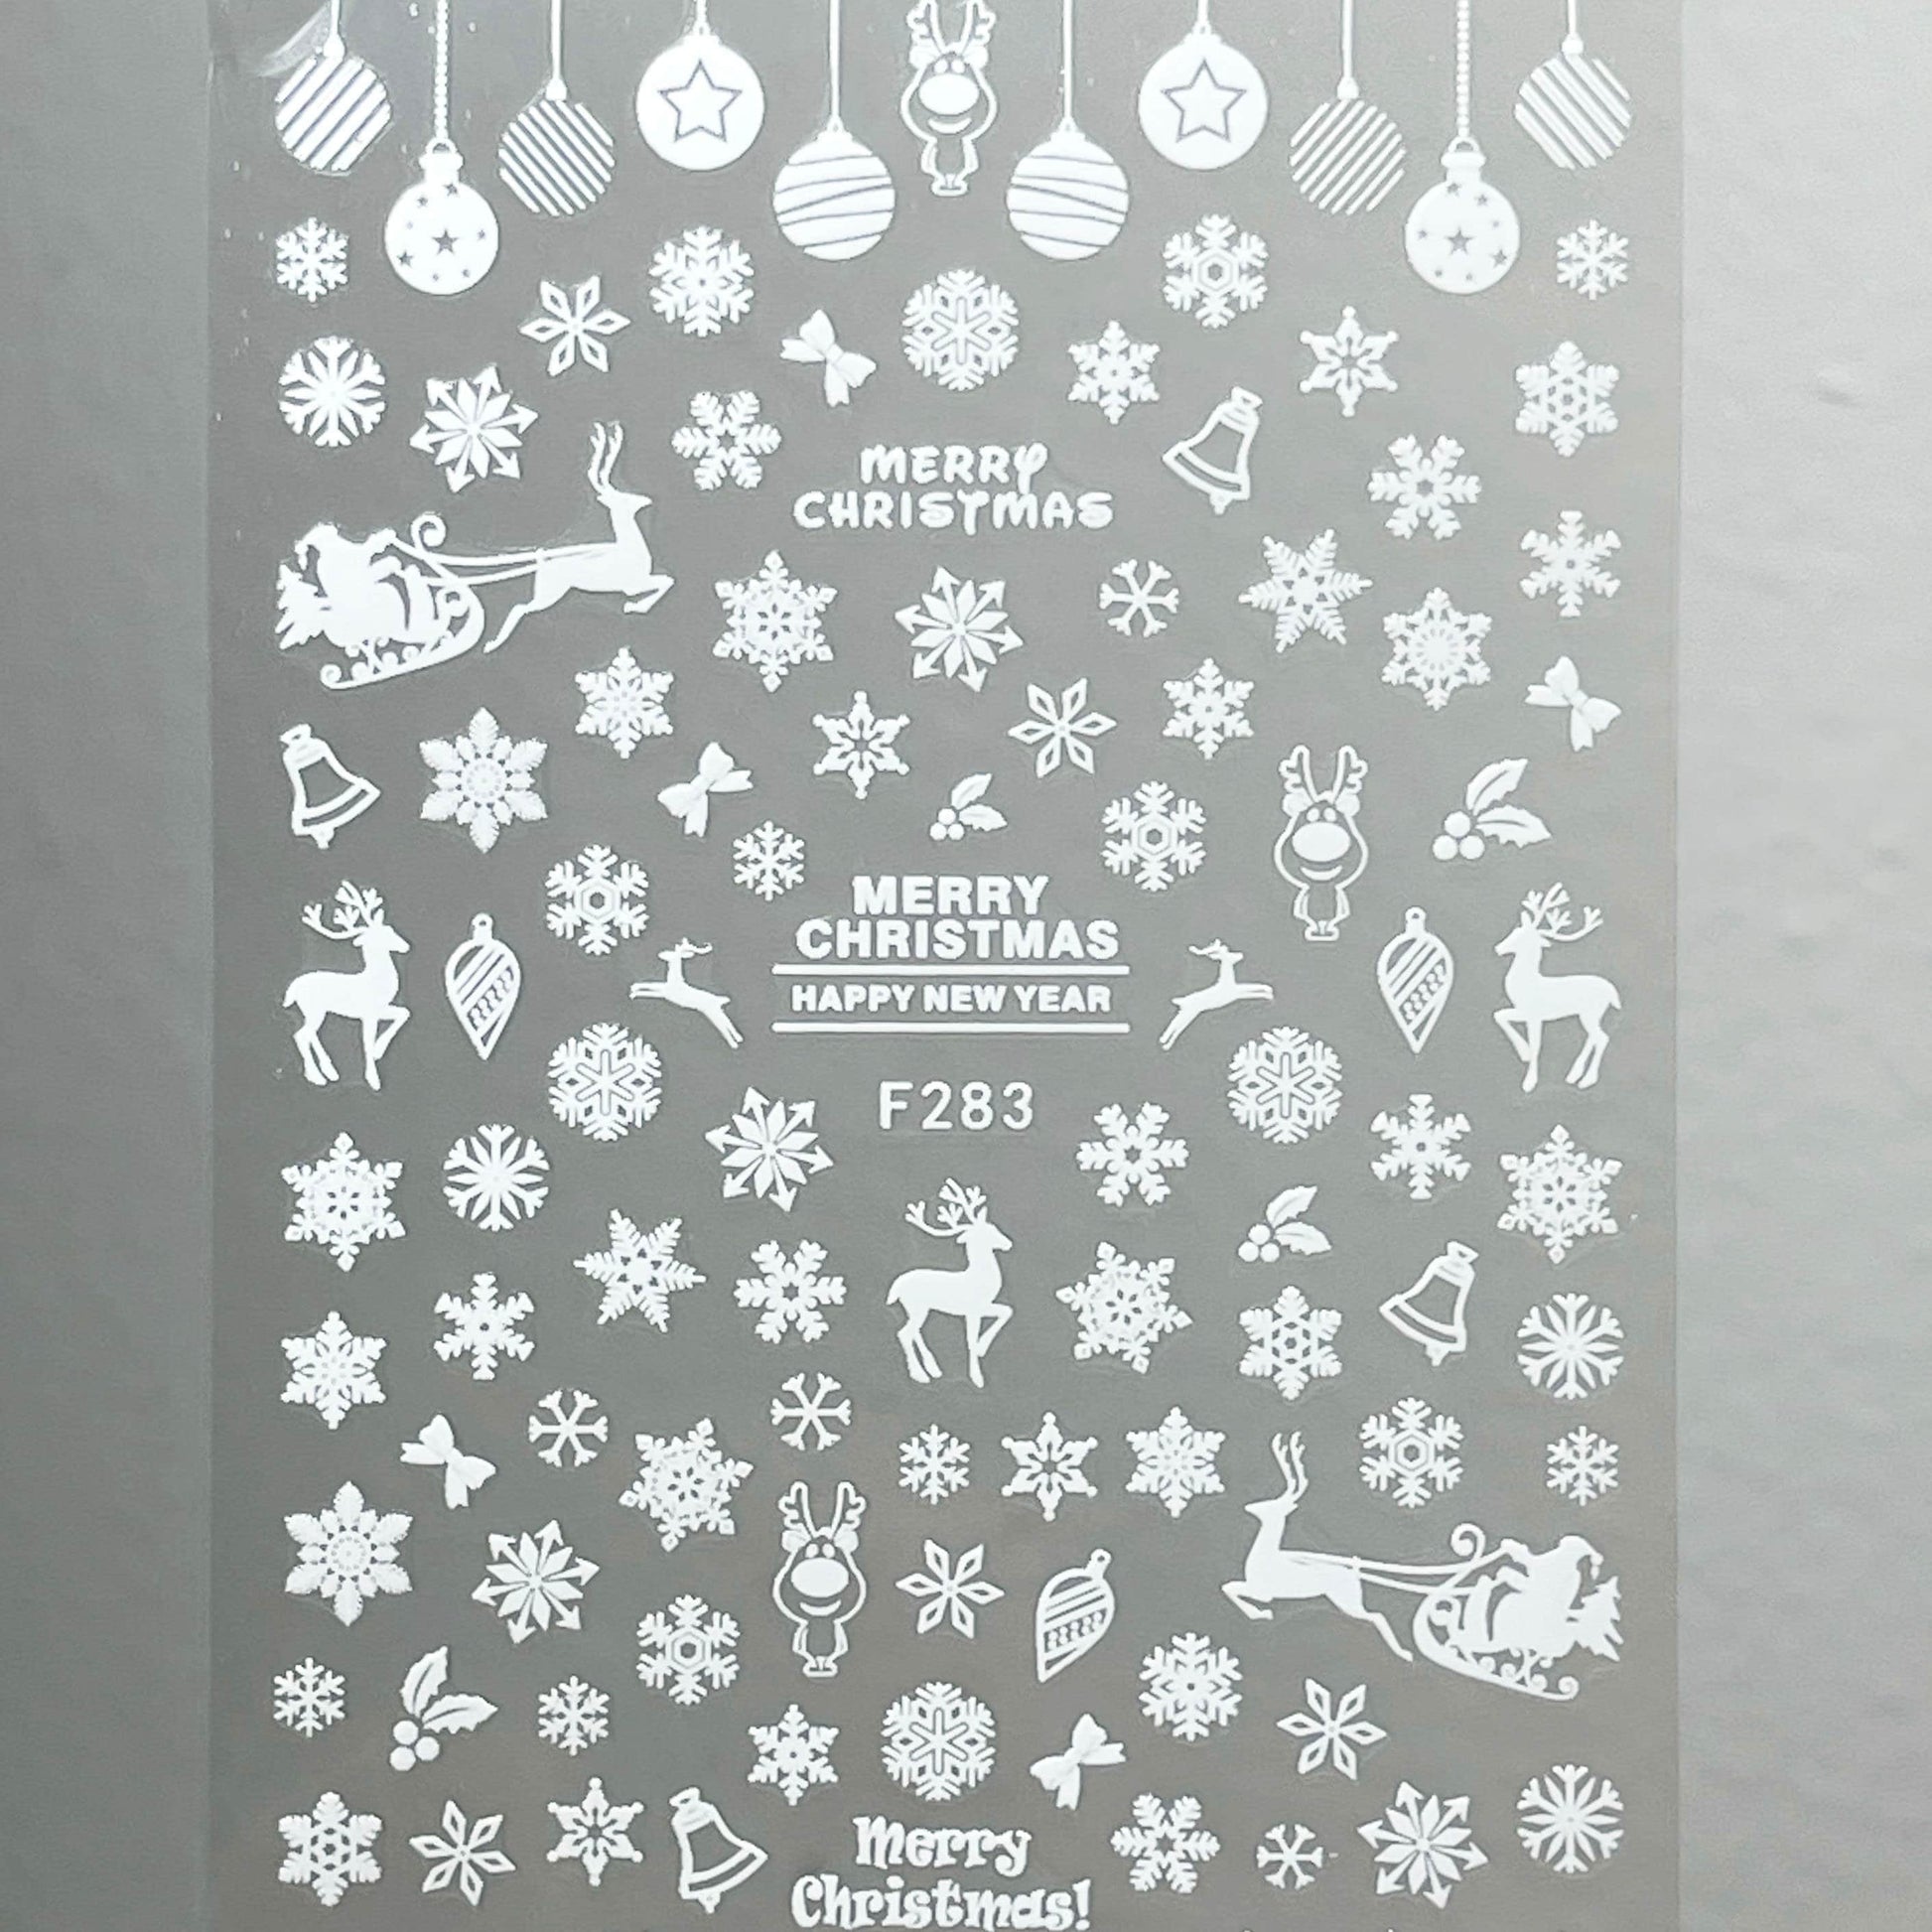 Christmas Snow Theme nail sticker/ Snow flakes Nail Art Stickers Self Adhesive Decals/Elk Santa Winter snowy Holiday gift nail art sticker